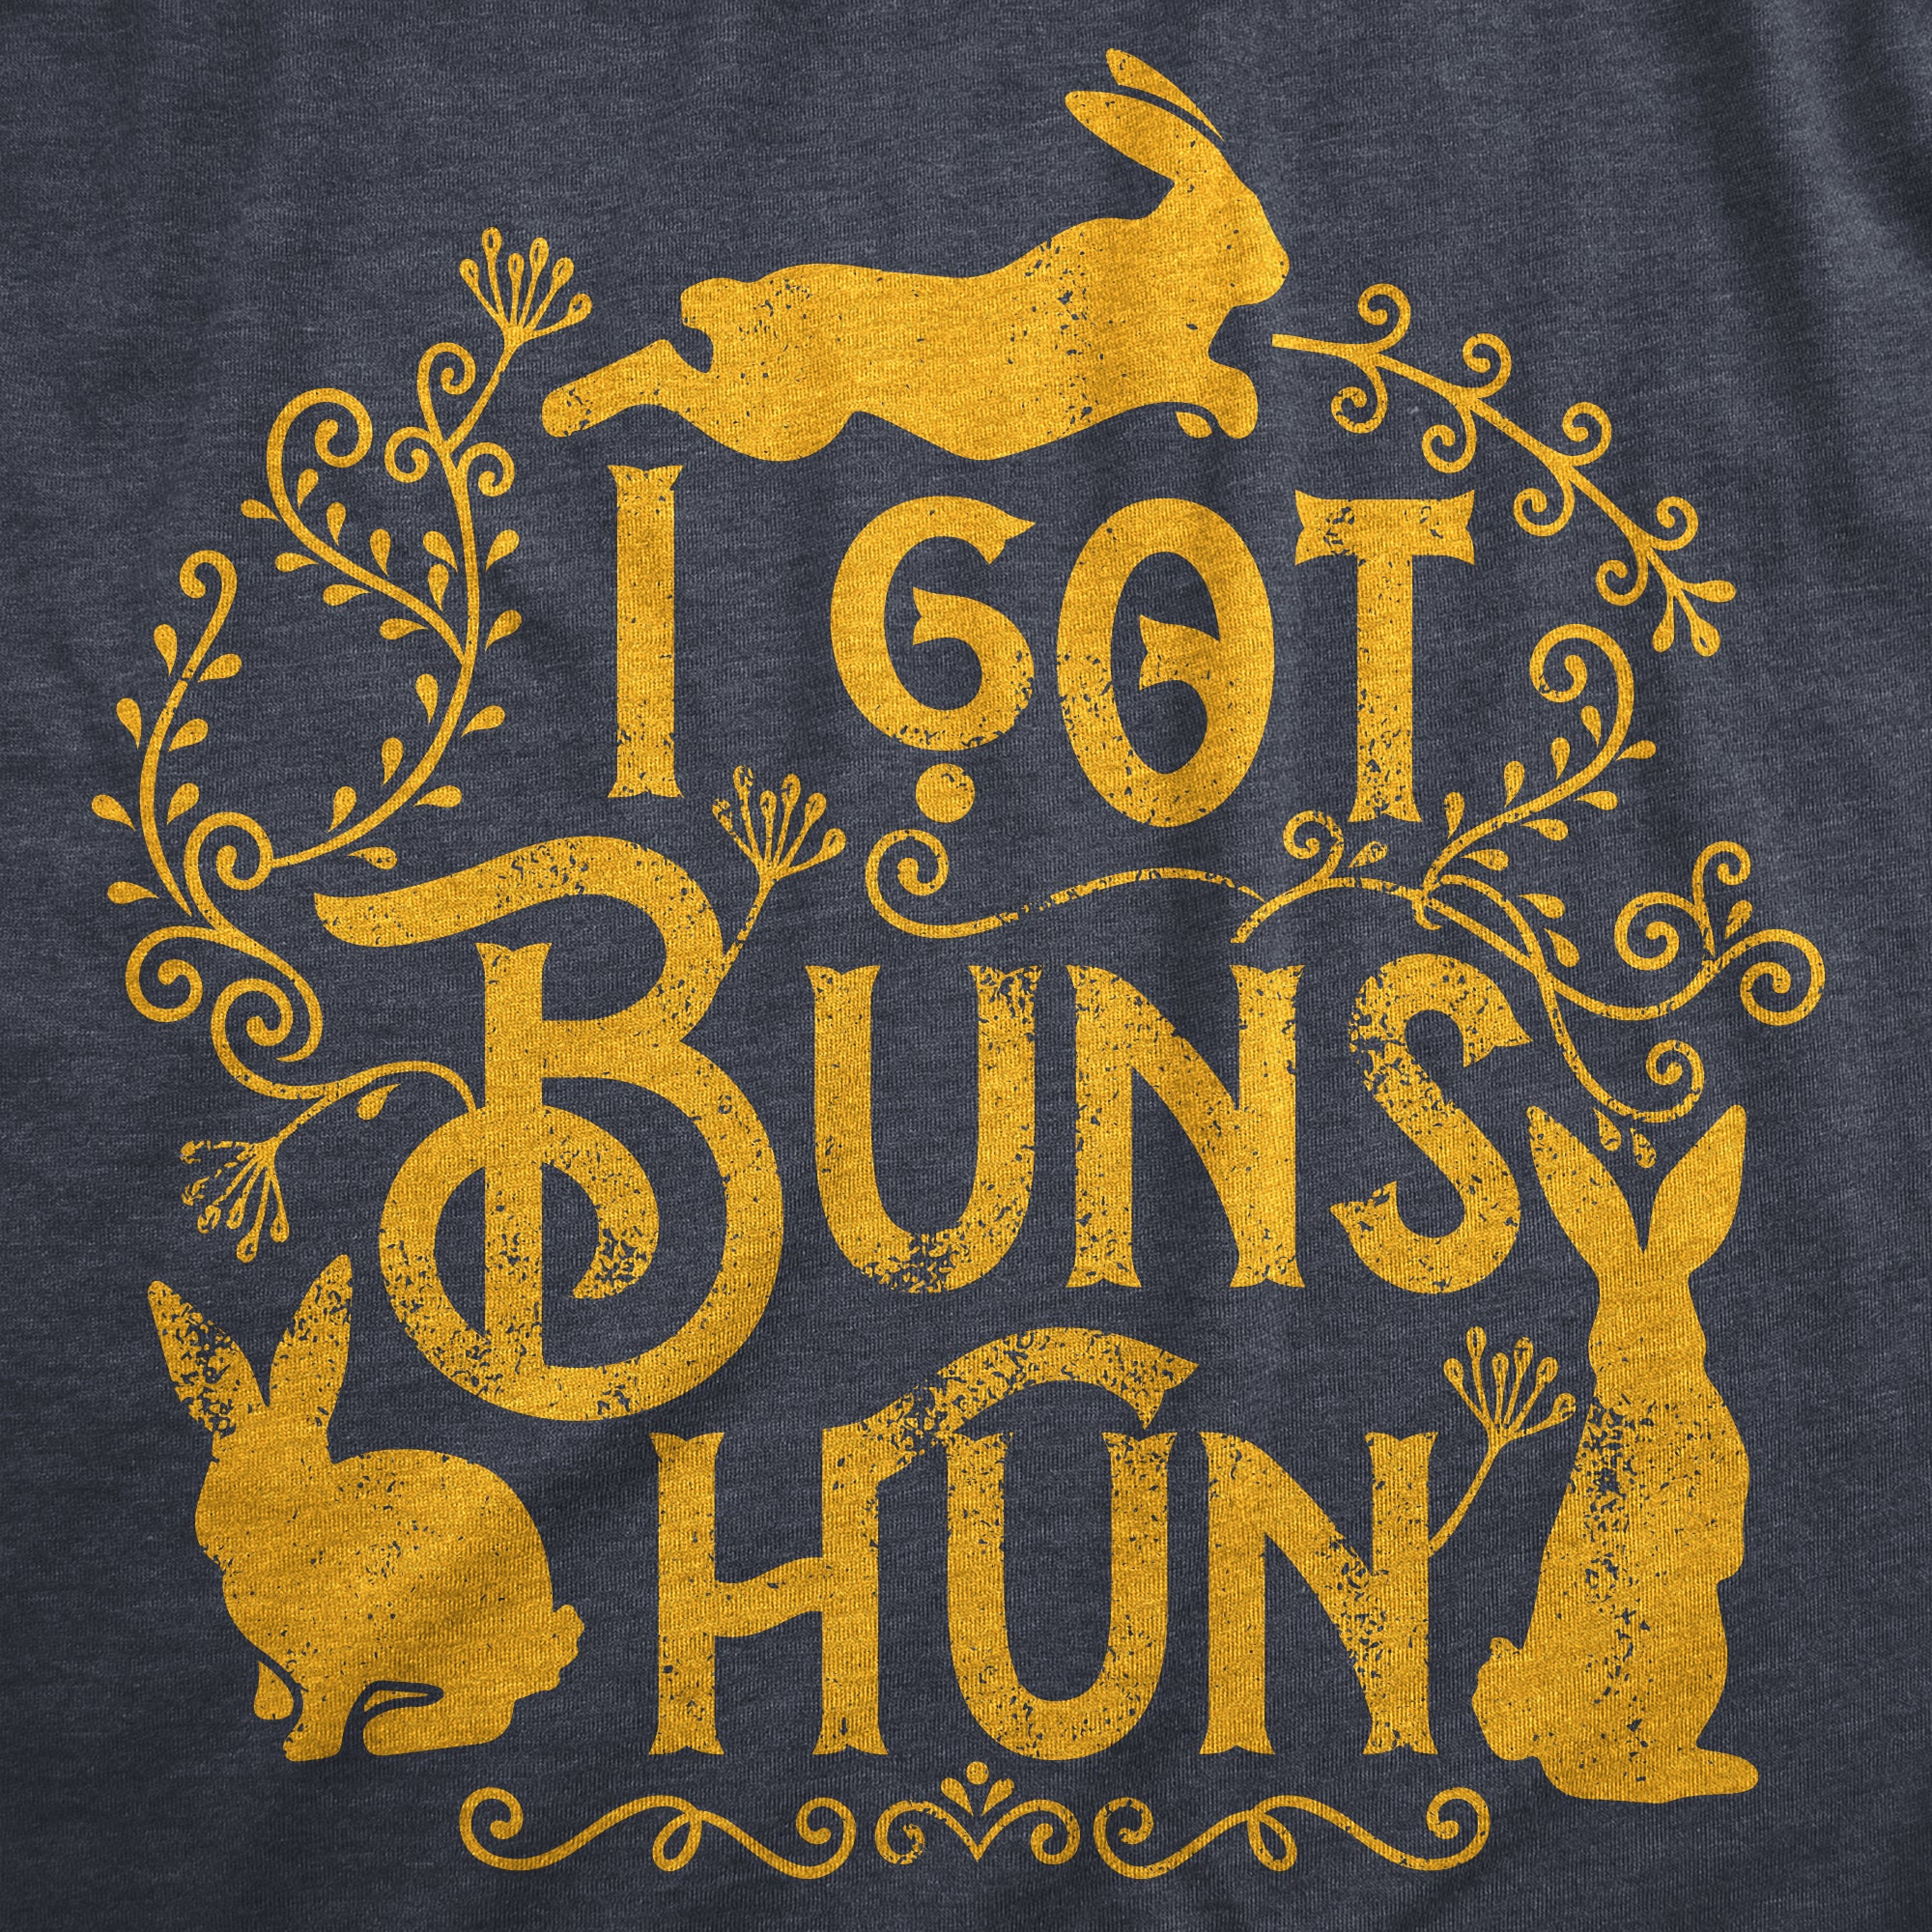 Funny Heather Navy - BUNS I Got Buns Hun Womens T Shirt Nerdy Easter Animal Tee